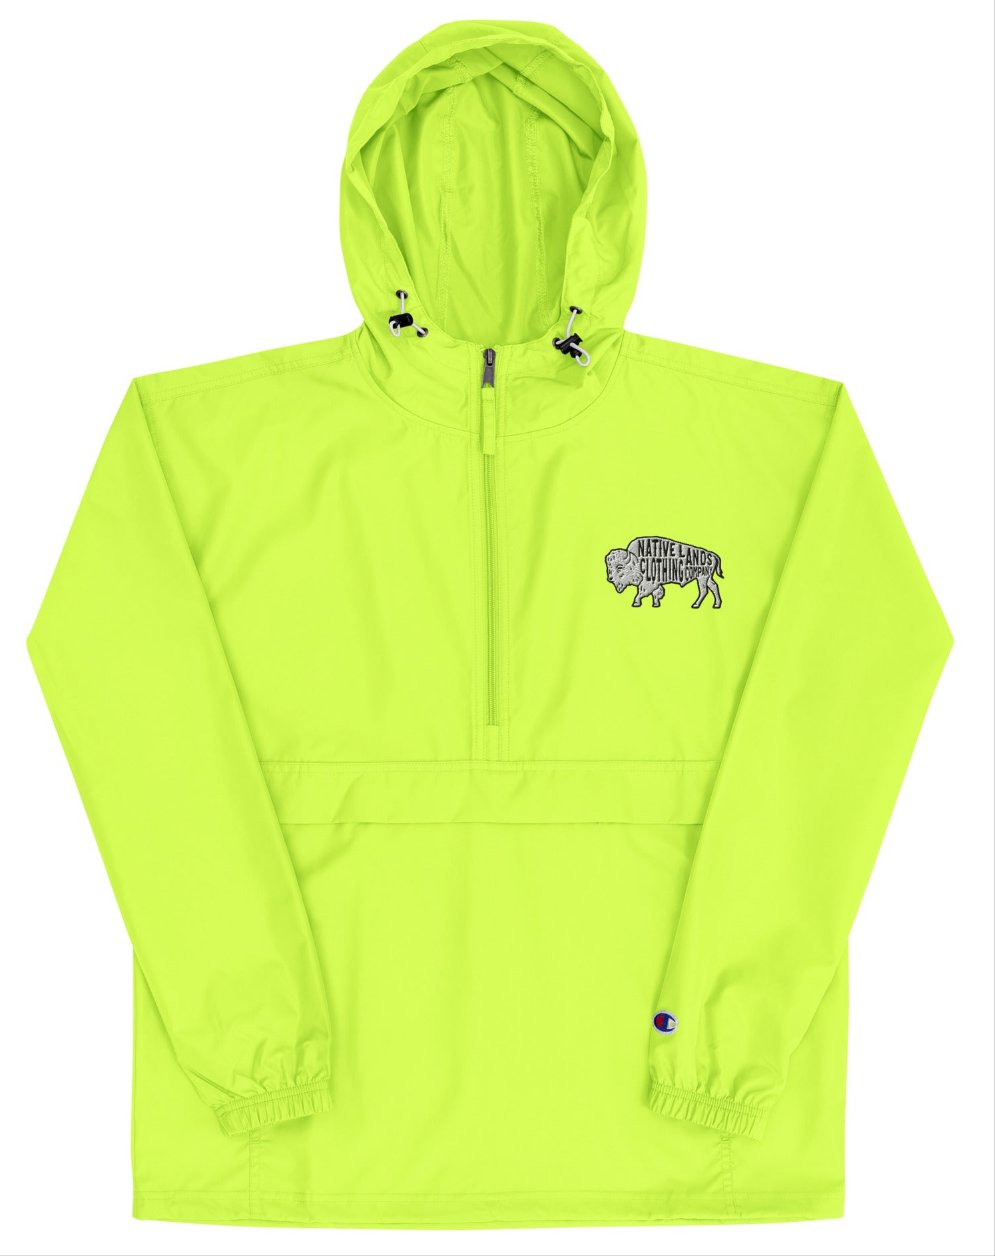 Bison Rain Jacket Embroidered Native American $ 52.00 Rain Jacket Native Lands Clothing Company LLC